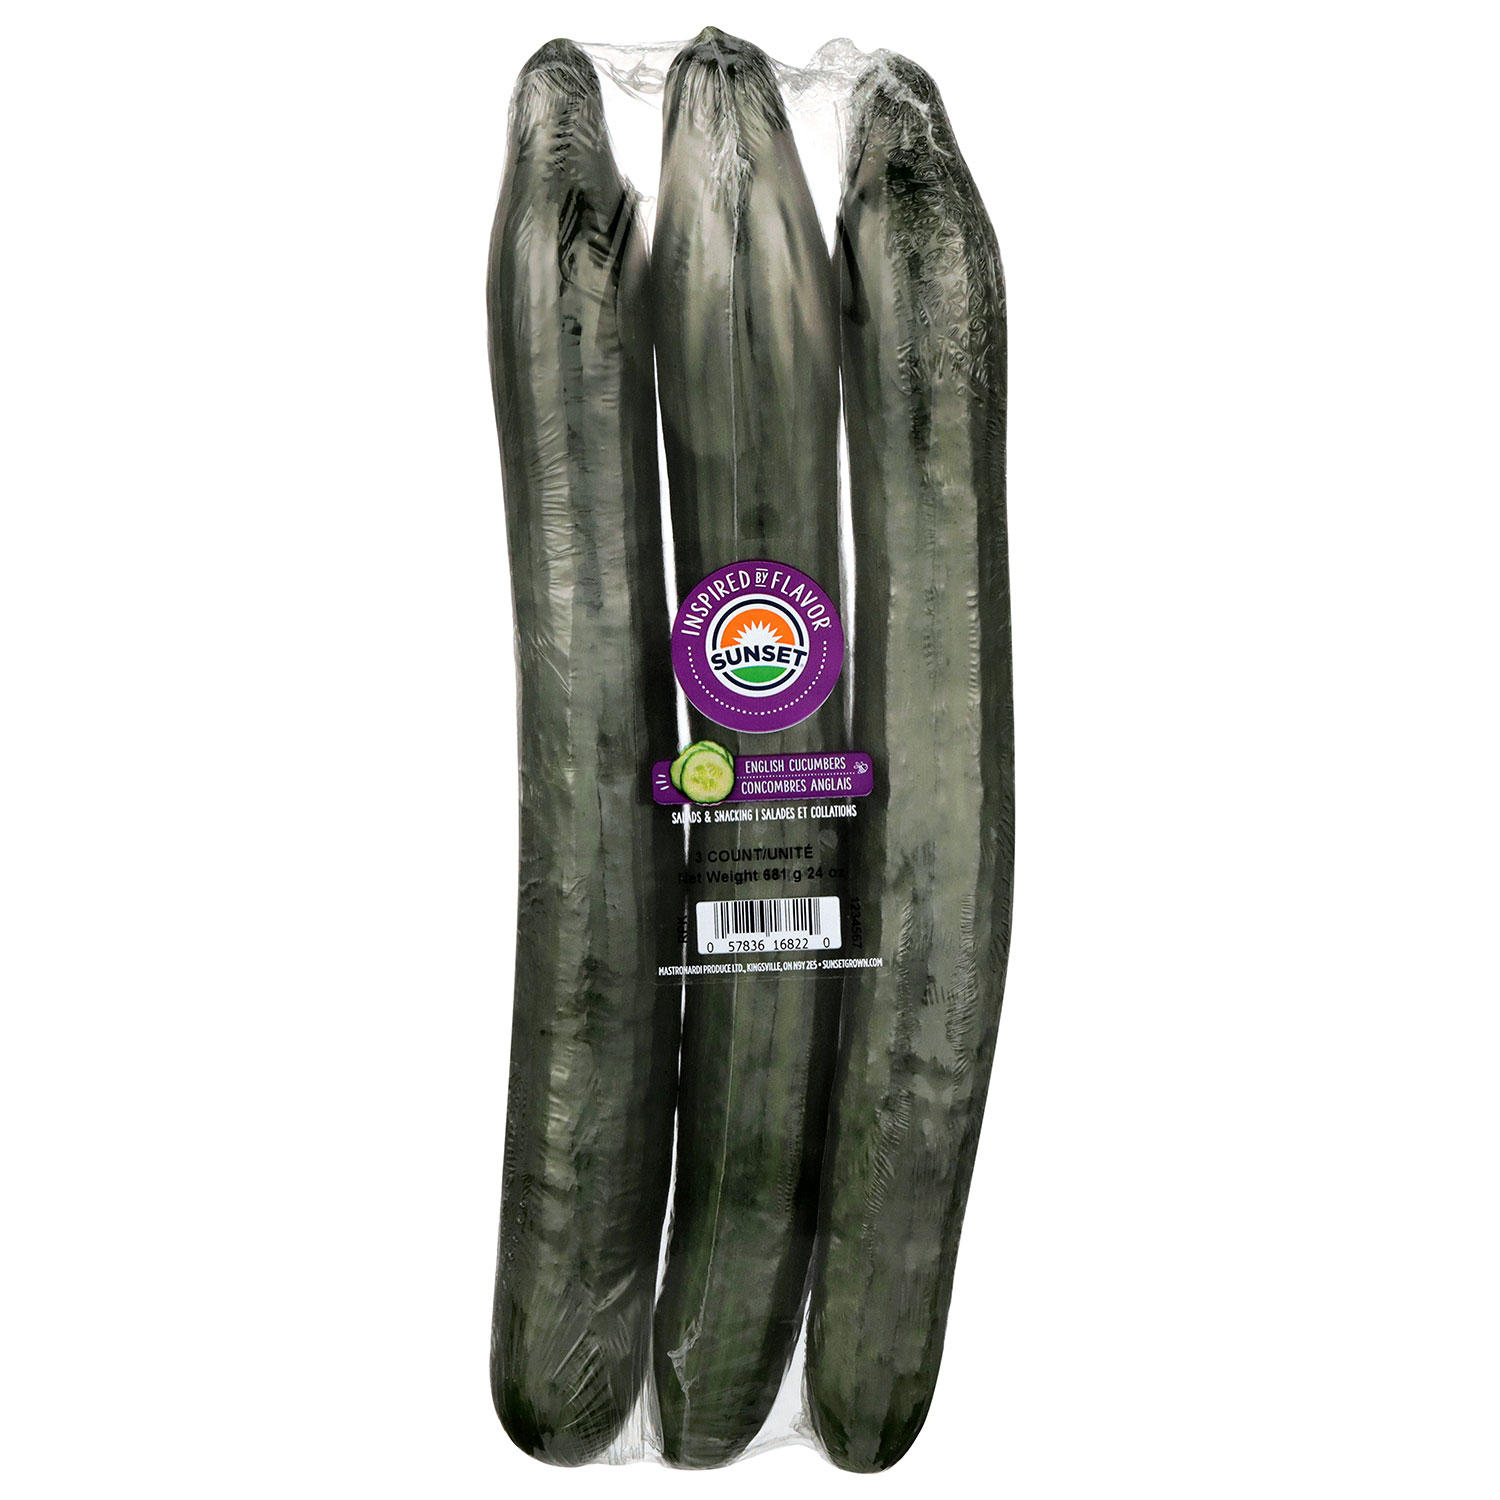 Seedless English Cucumbers